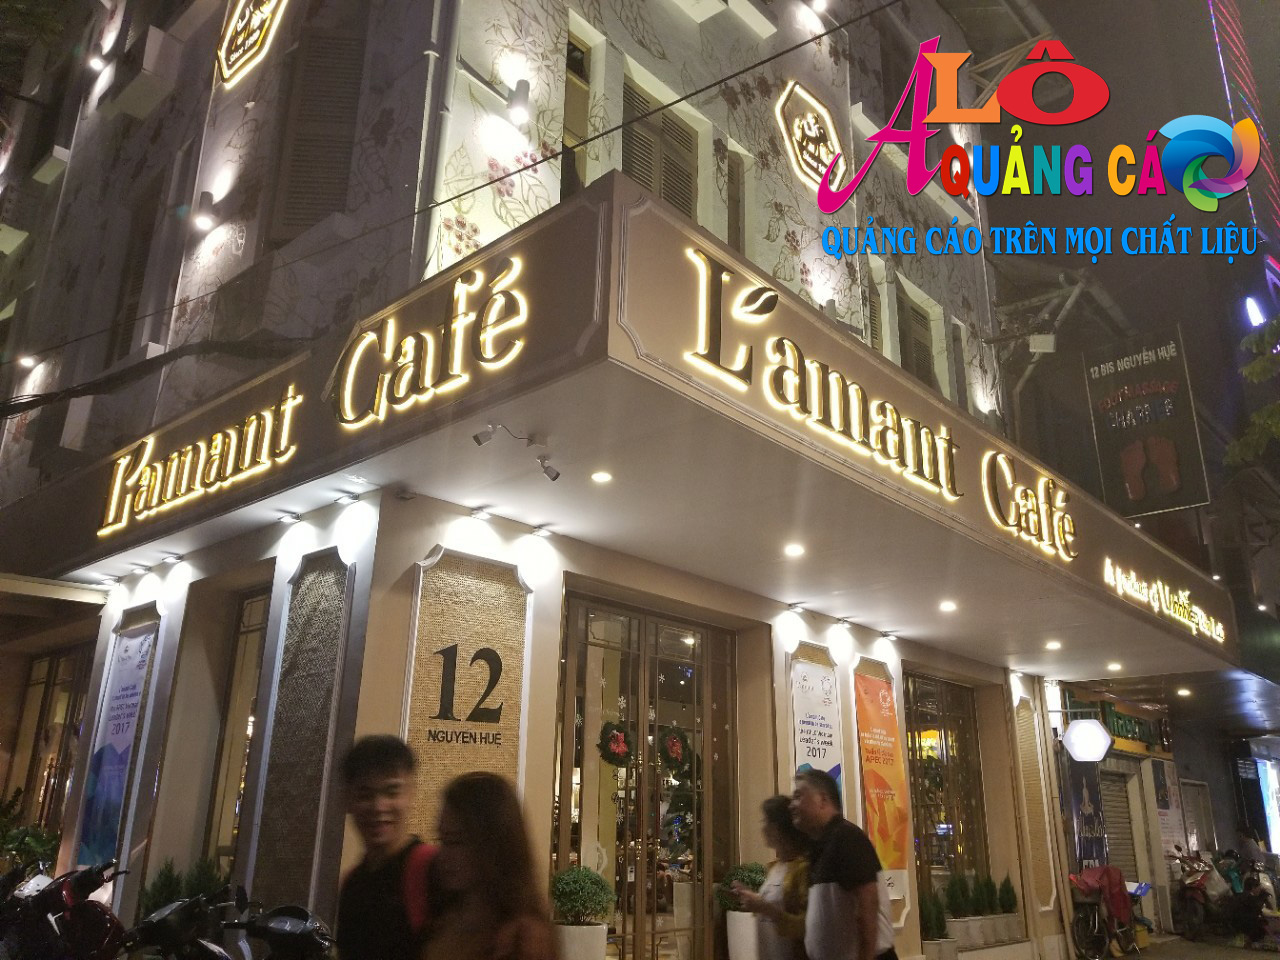 LAmant Cafe